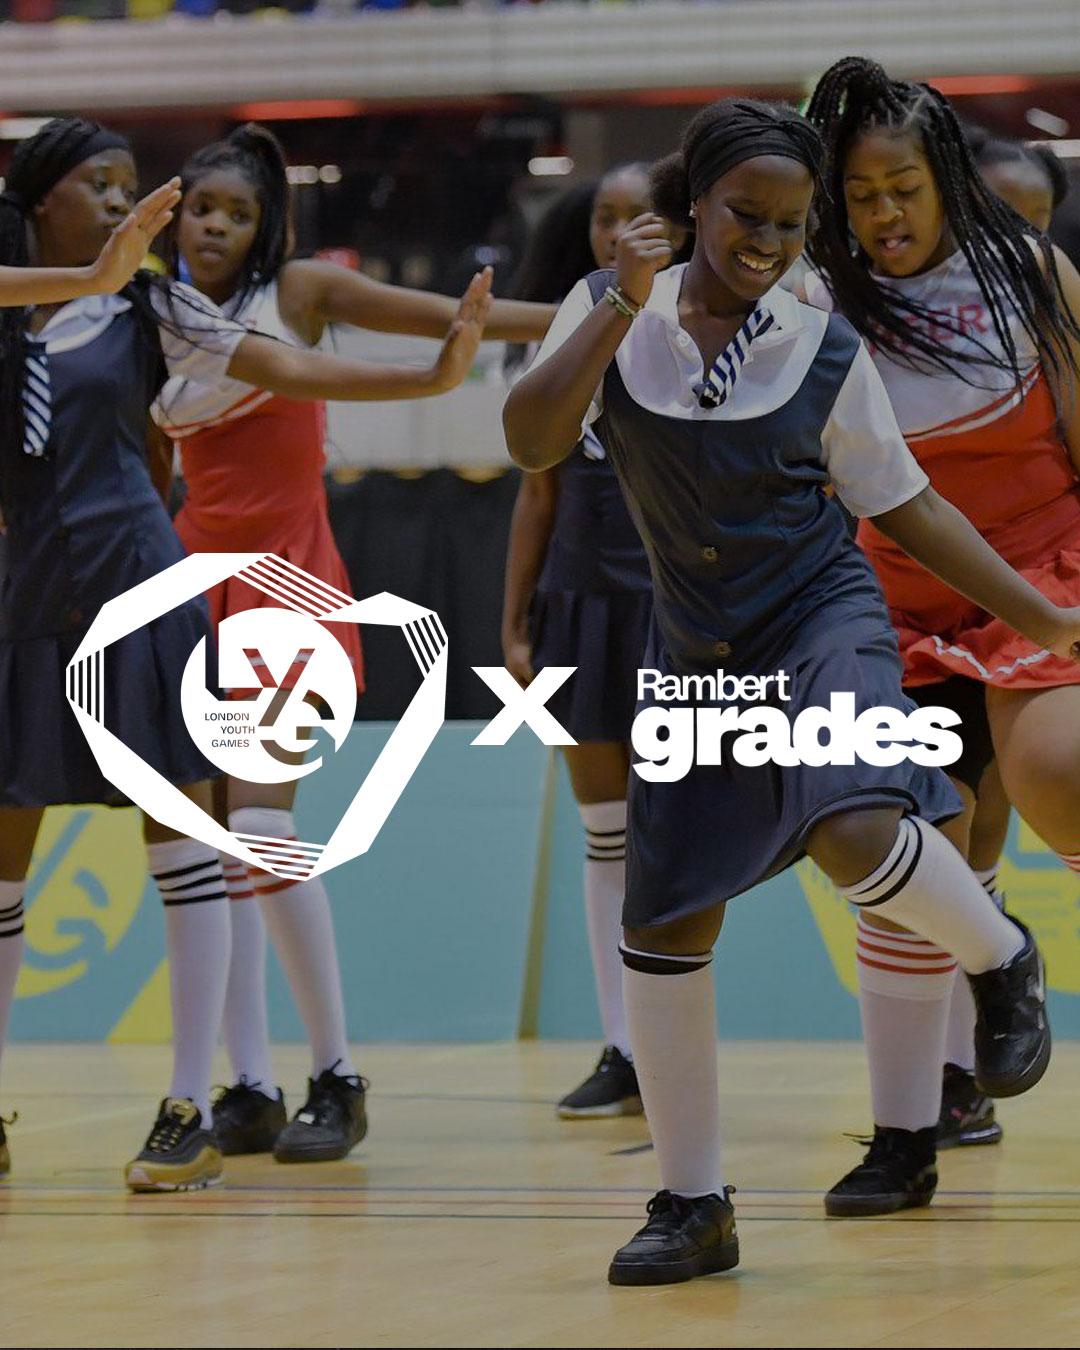 London Youth Games x Rambert Grades logos, on 4 female dancers image